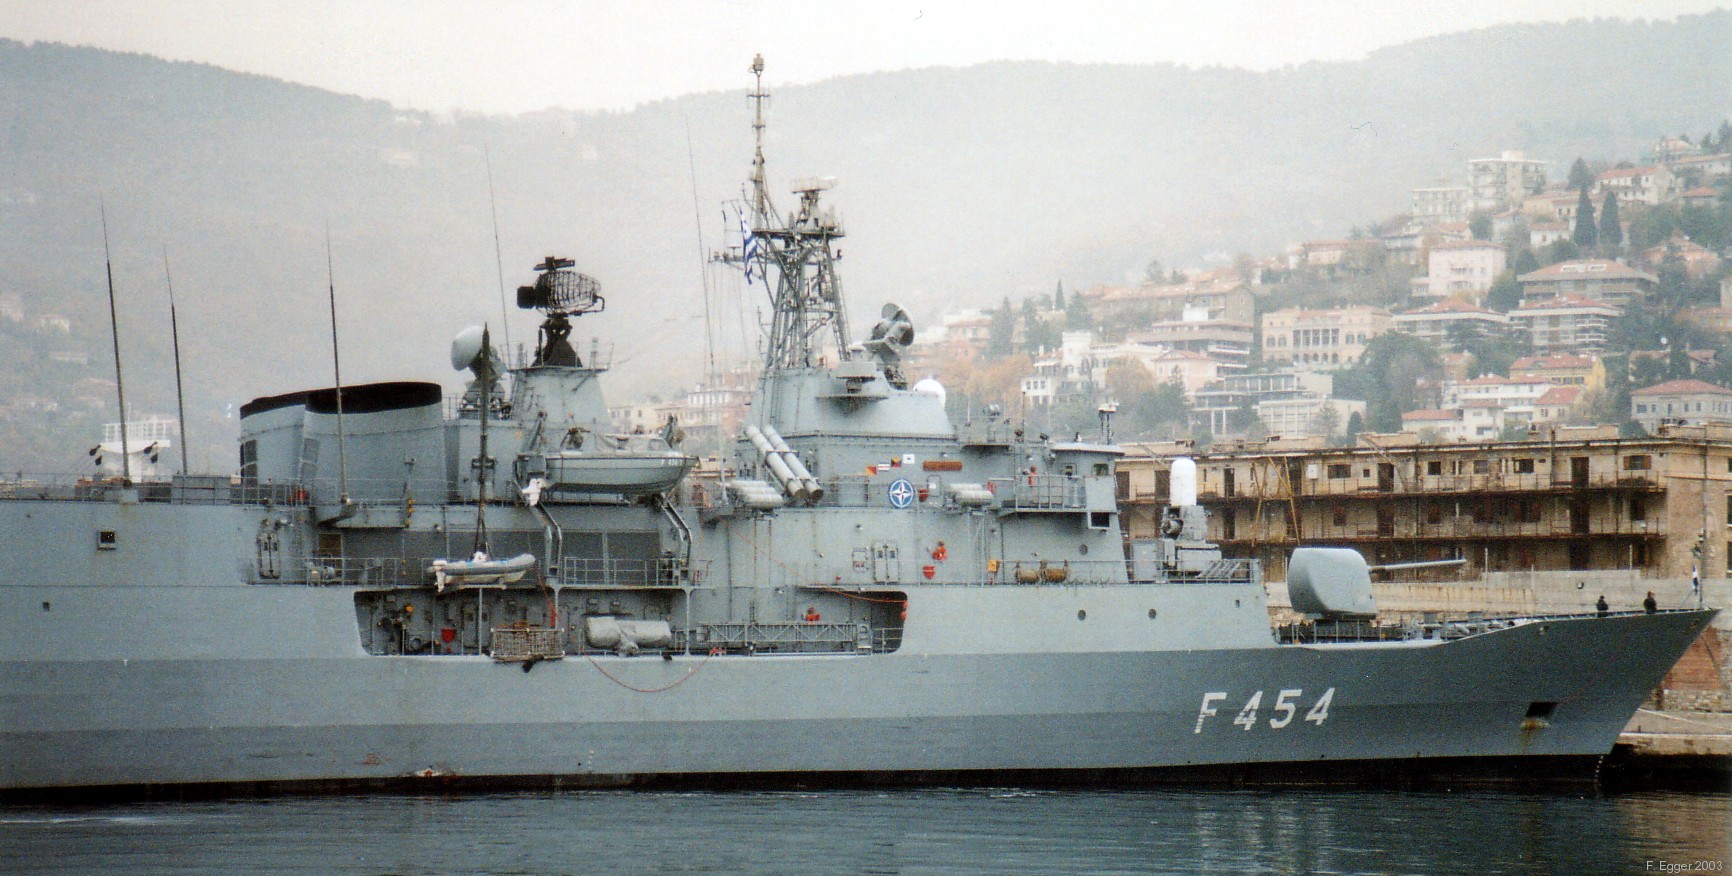 f 454 hs psara hydra class frigate meko-200hn hellenic navy greece nato standing naval force mediterranean stanavformed trieste italy 2003 09